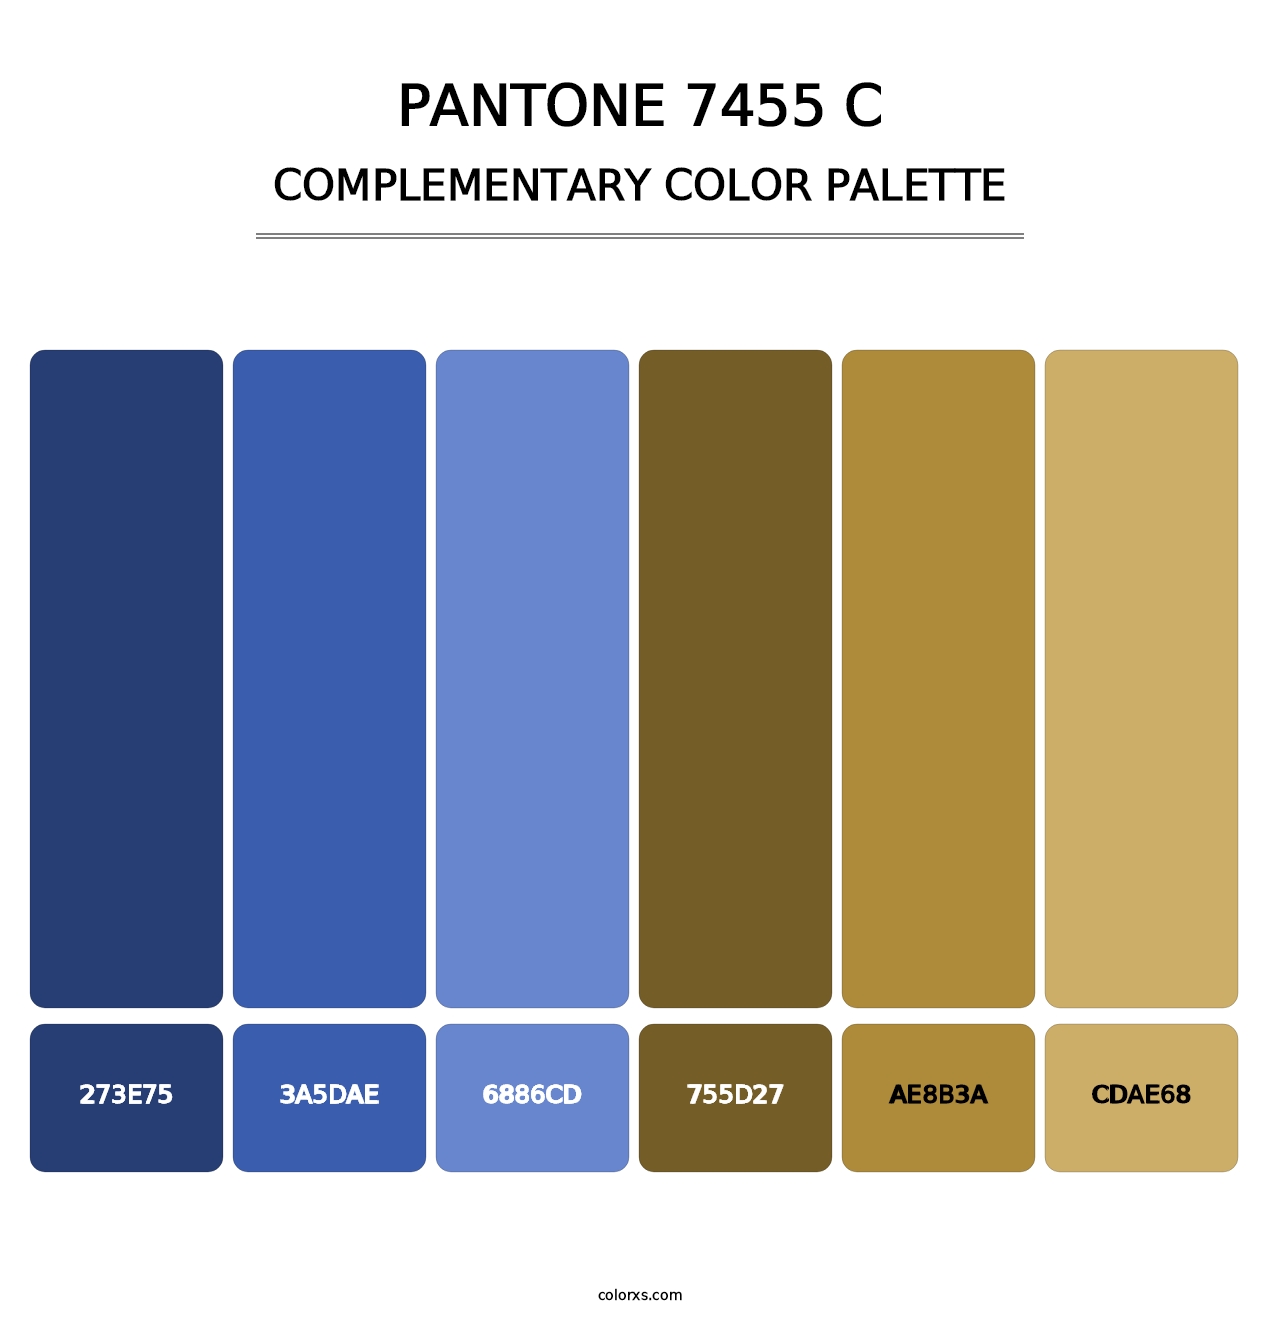 PANTONE 7455 C - Complementary Color Palette